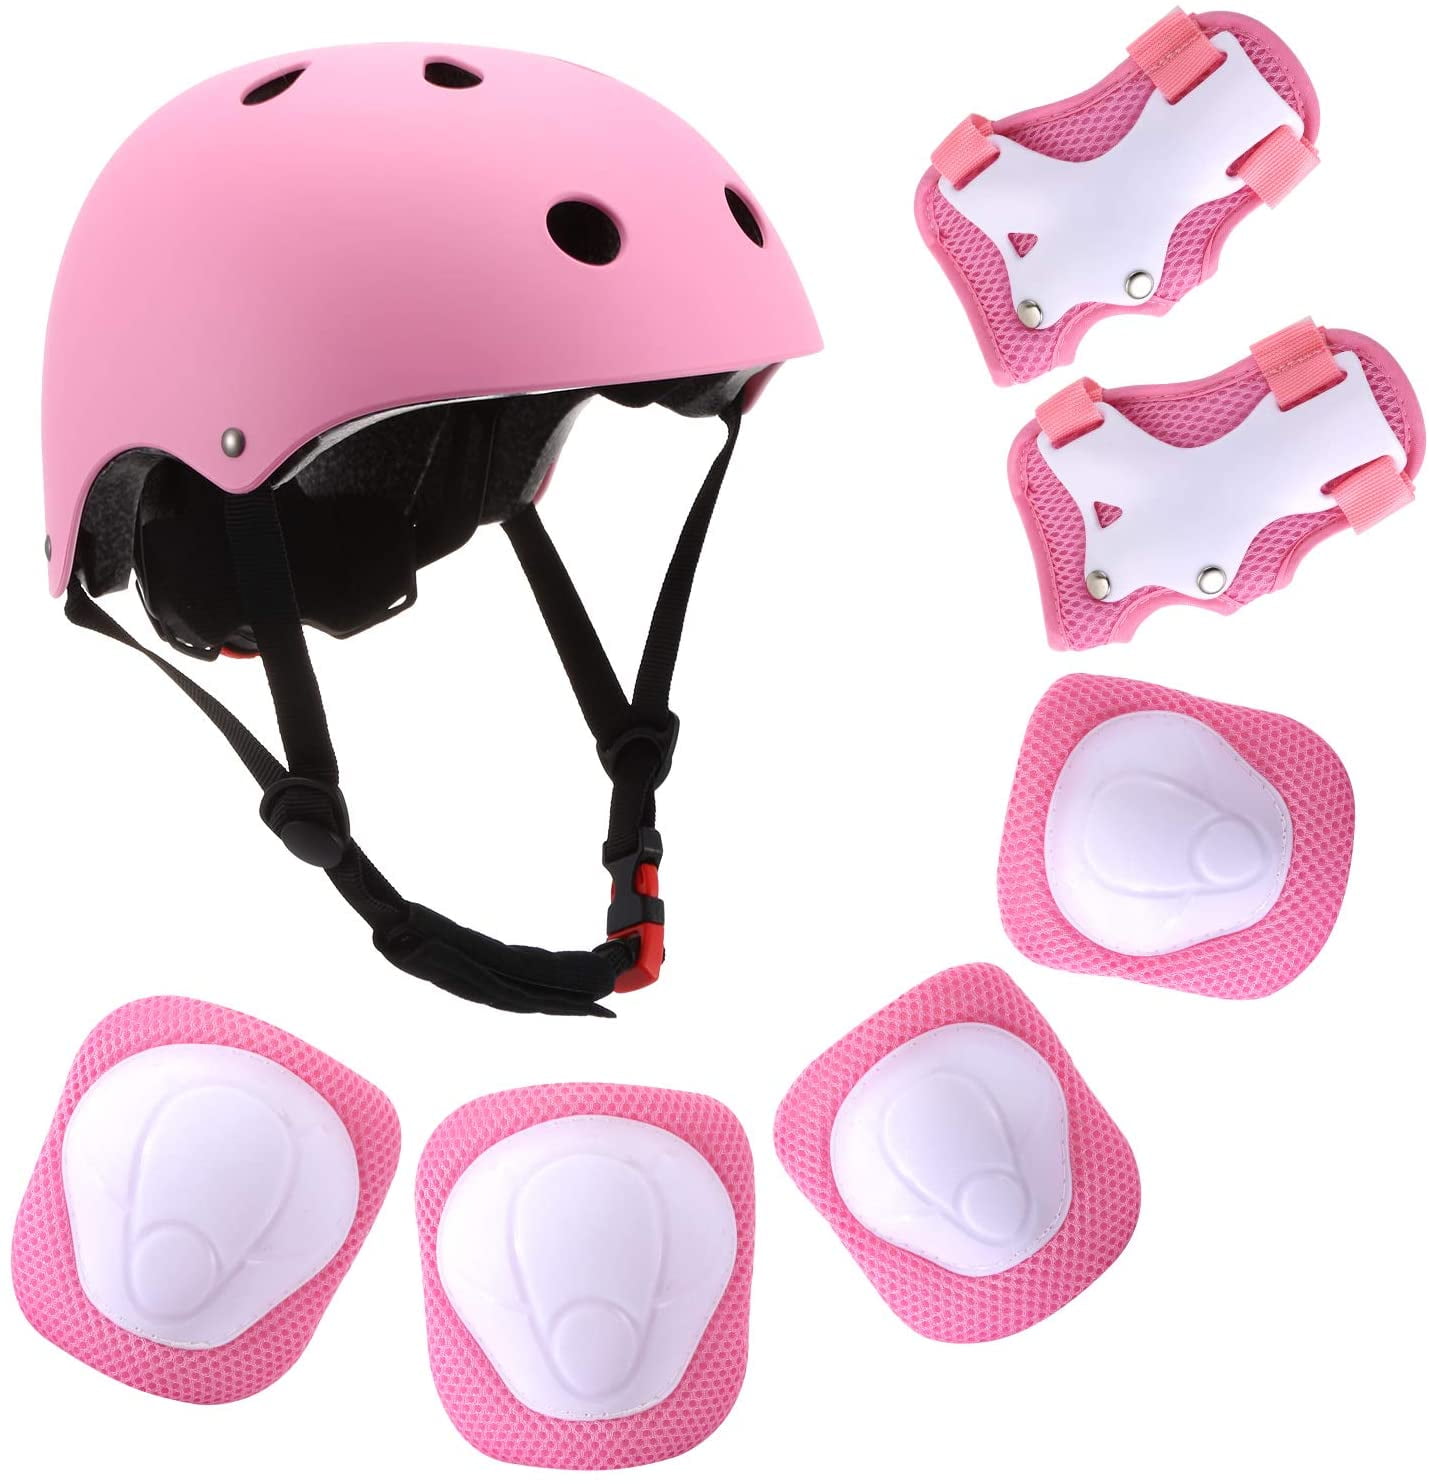 Kids Protective Gear Set Boys Girls Adjustable Size Helmet with Knee Pads Elbow 